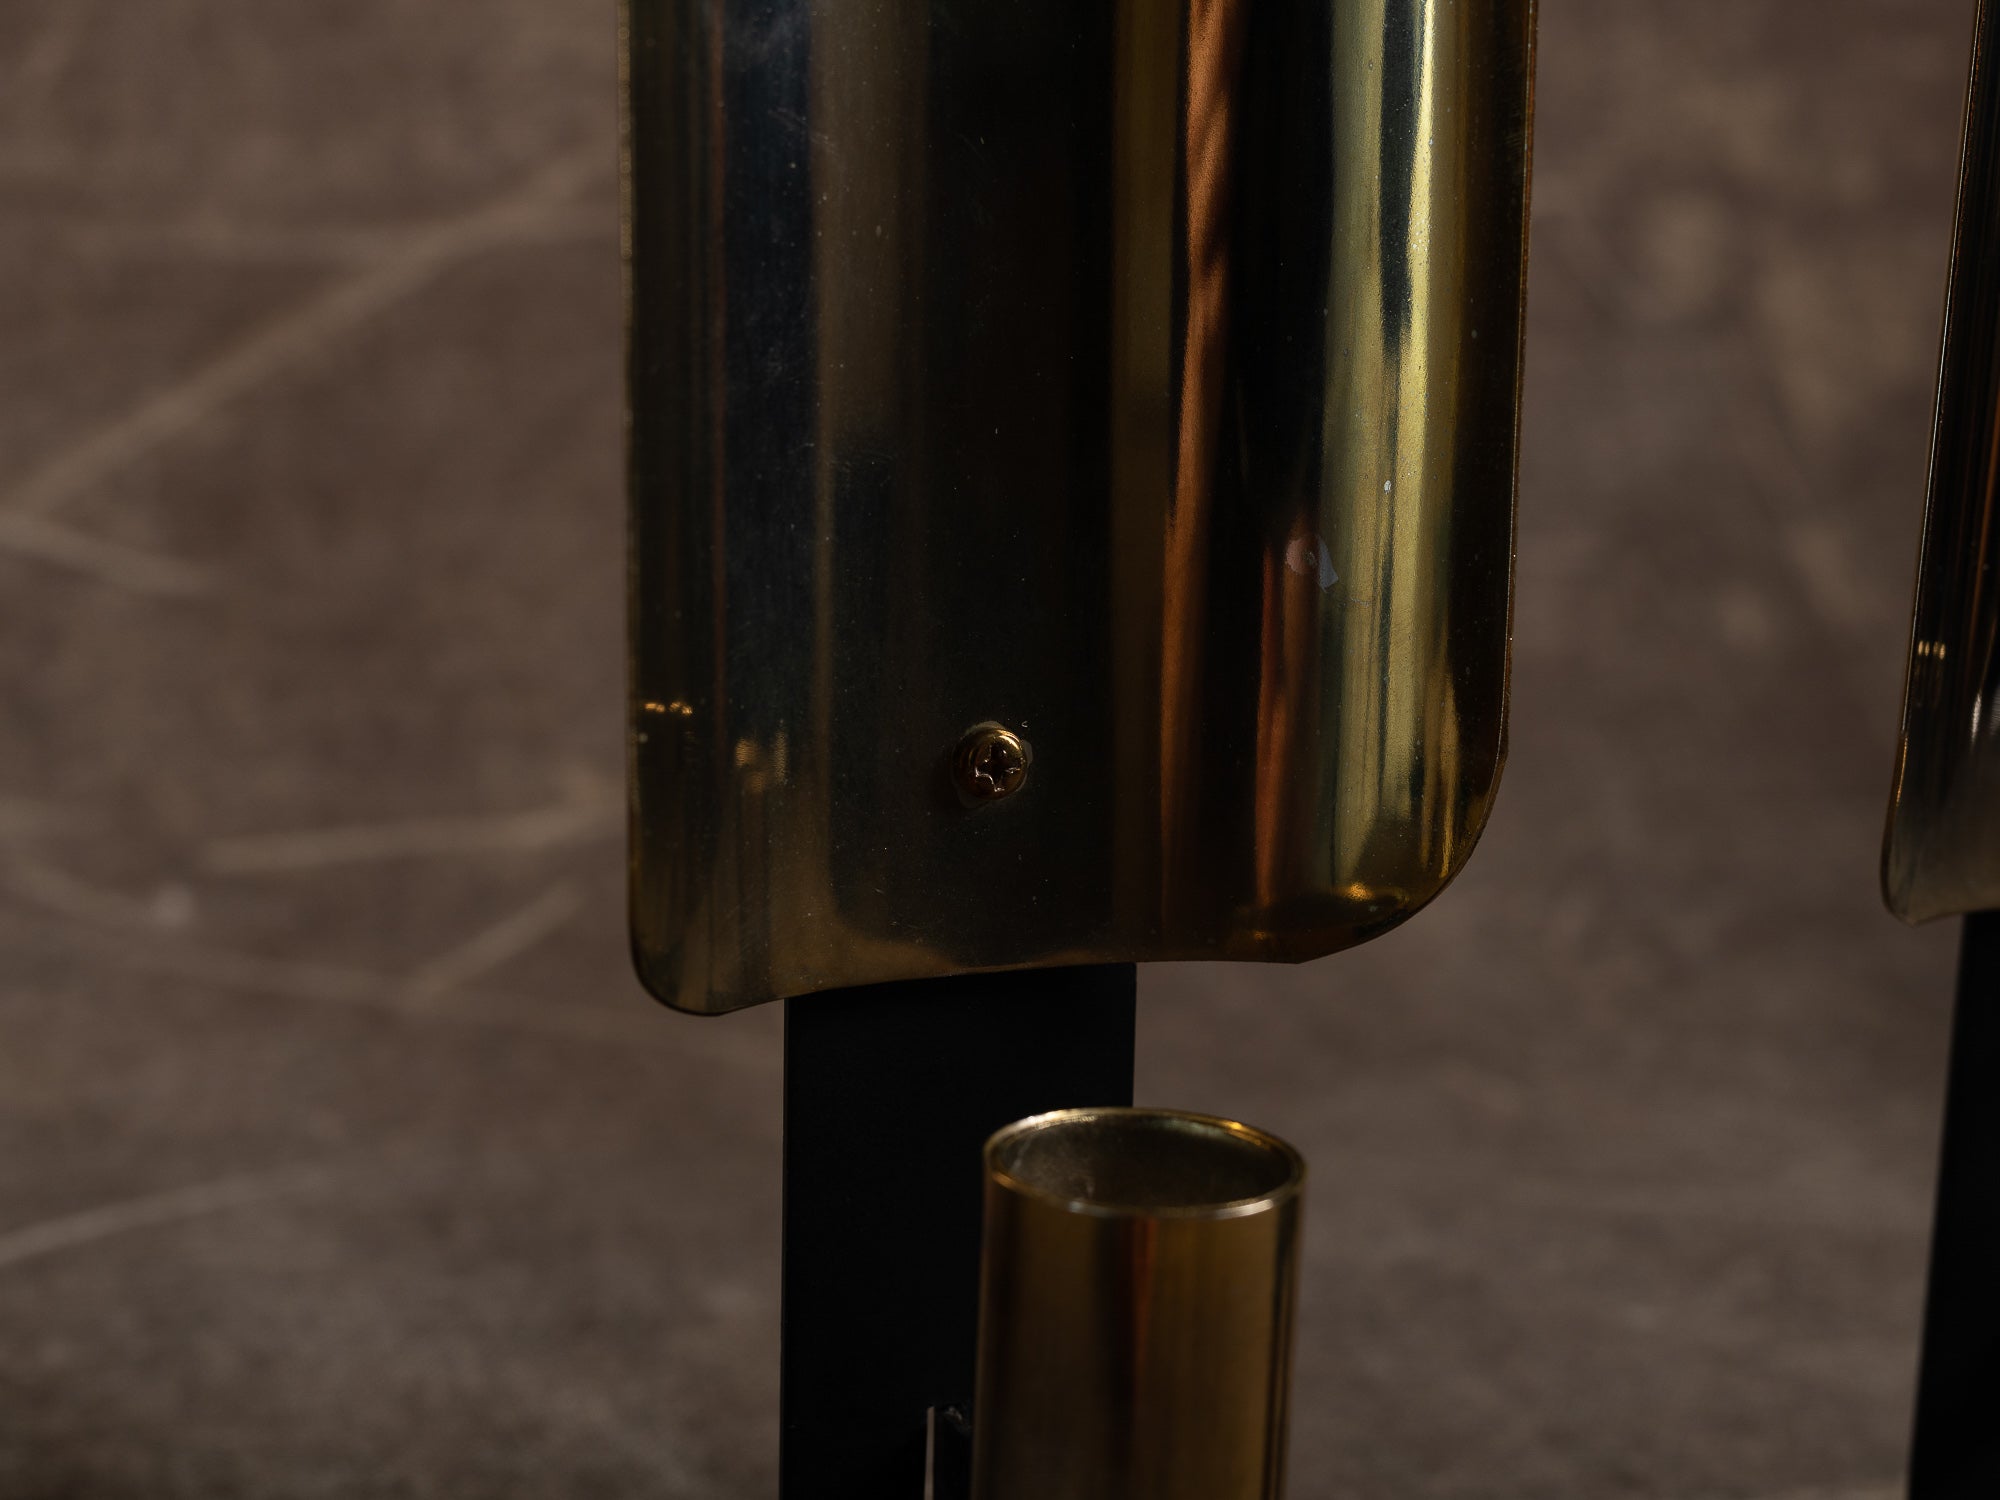 Paire de candélabres miroirs d'appliques en laiton par Ragla Belysning, Norvège (vers 1970)..Set of 2 modernist brass wall hanging candle holders by Ragla Belysning, Norway (ca. 1970)